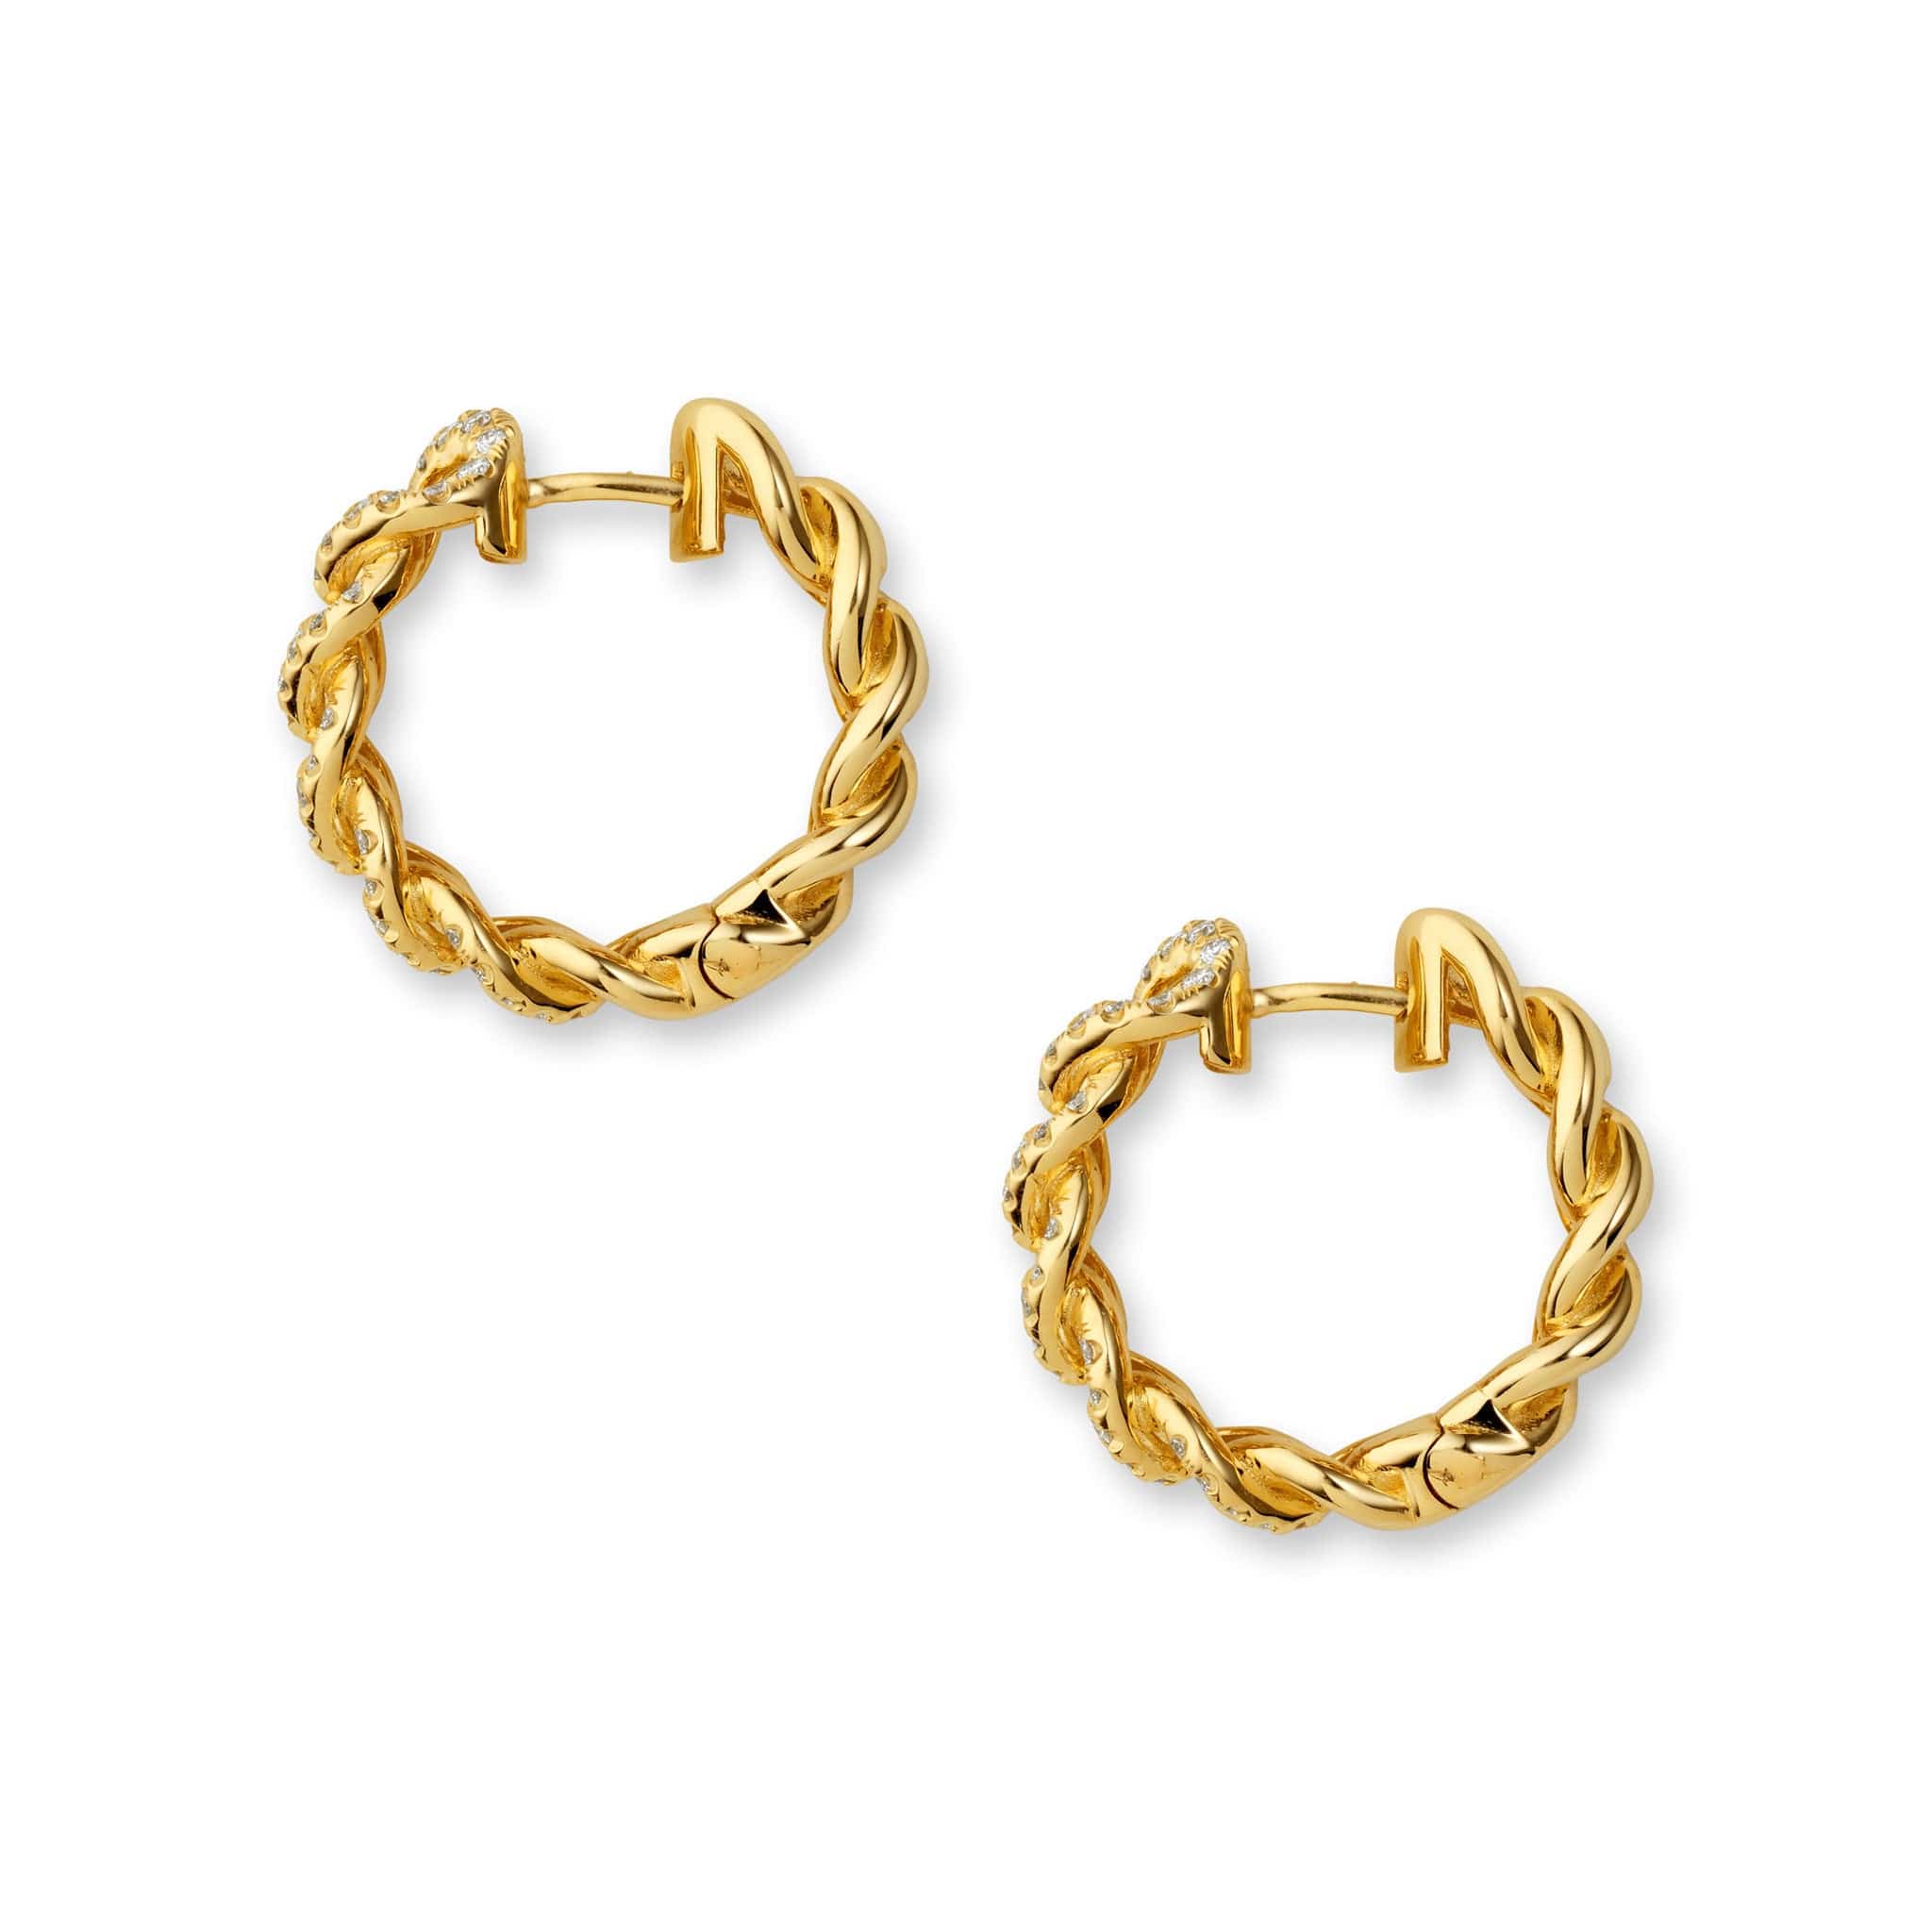 Side shot of chain link gold diamond earrings